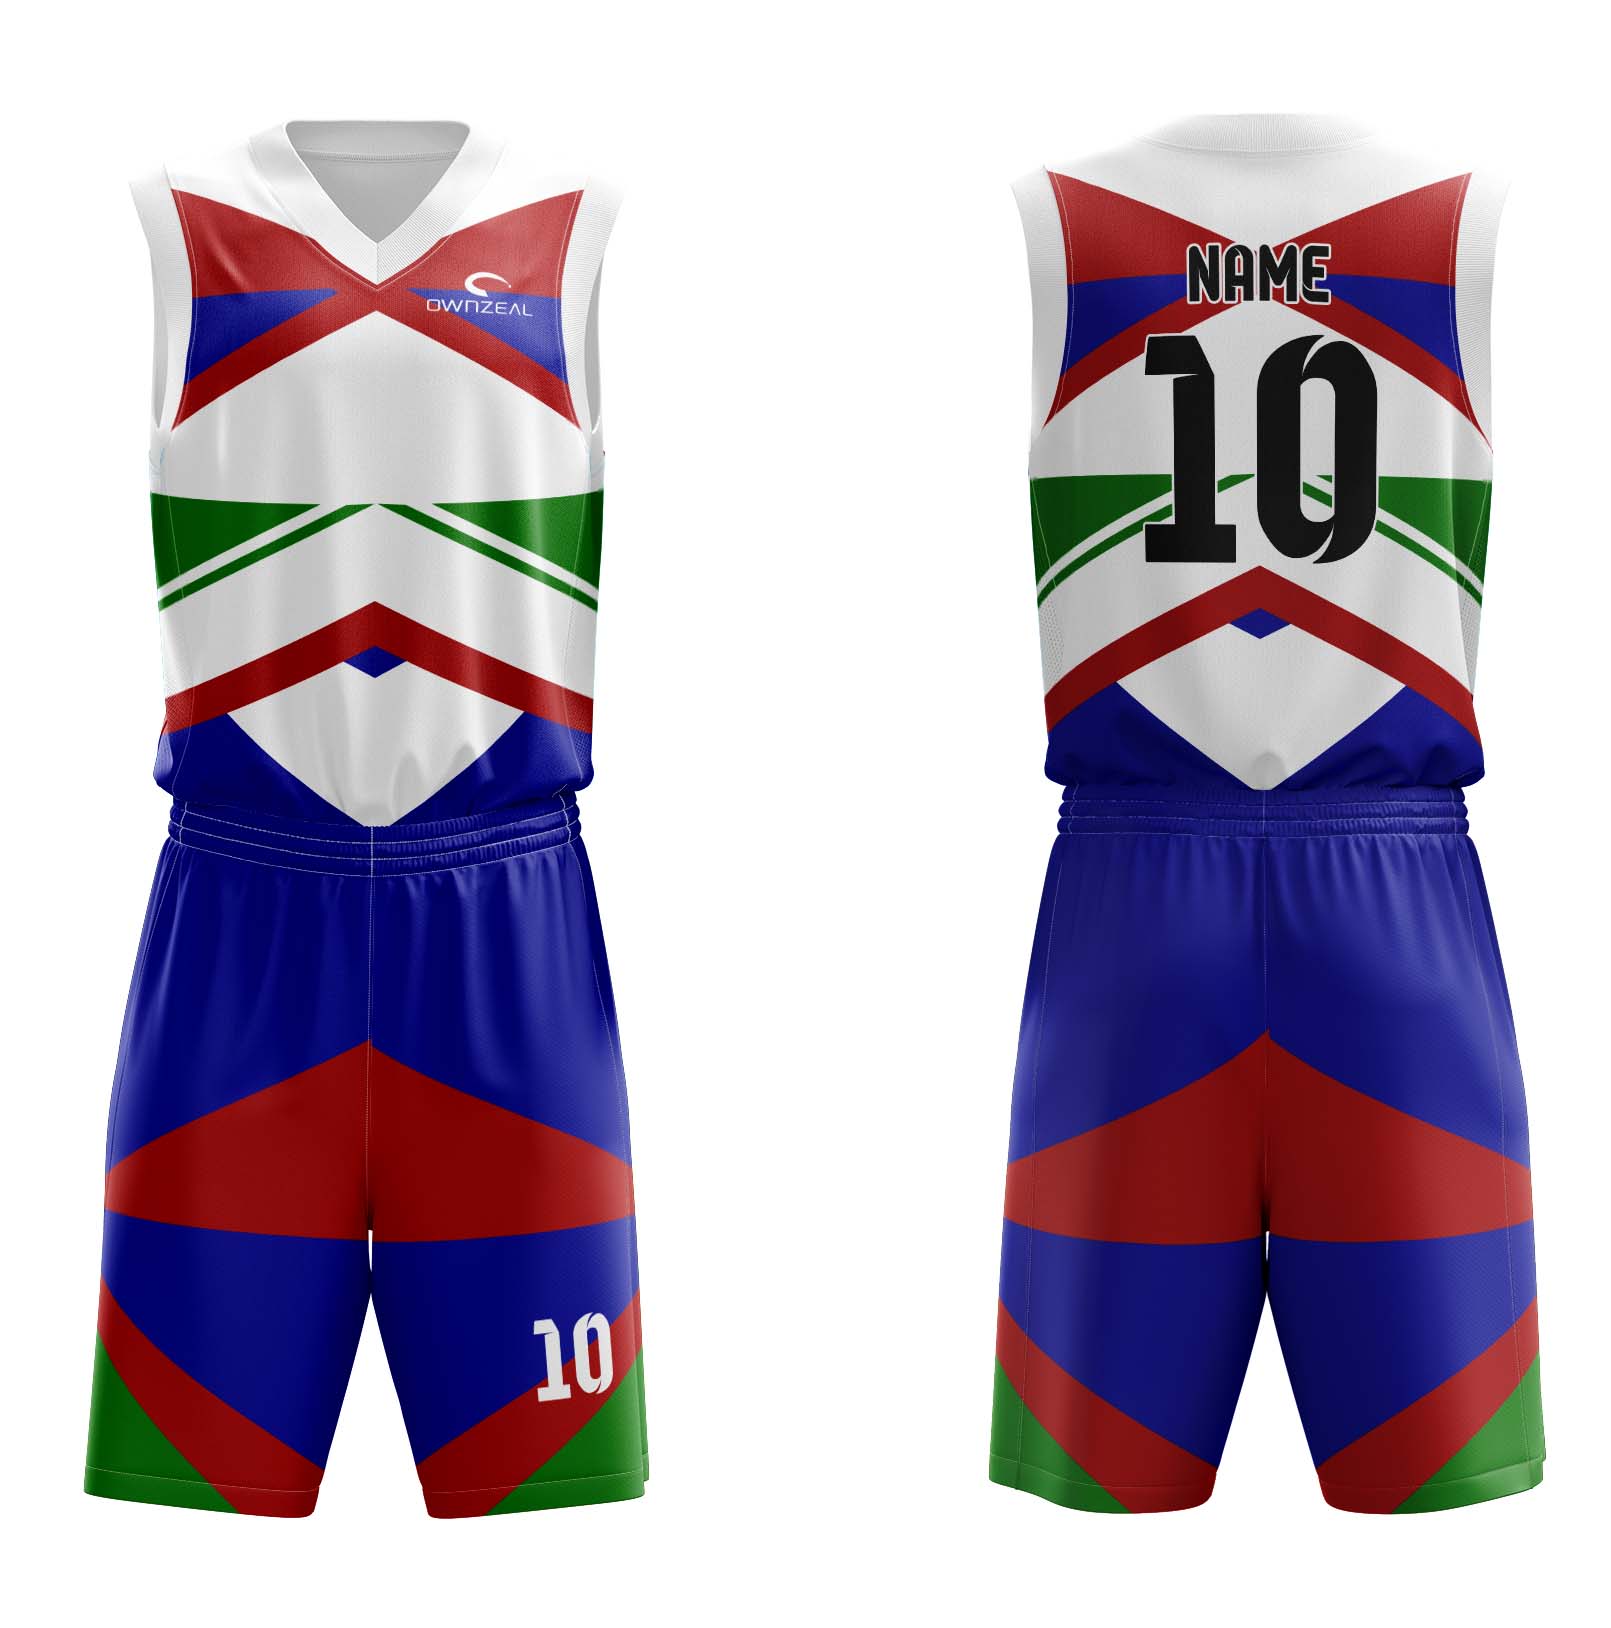 Custom Sublimated Basketball Uniforms - BU140